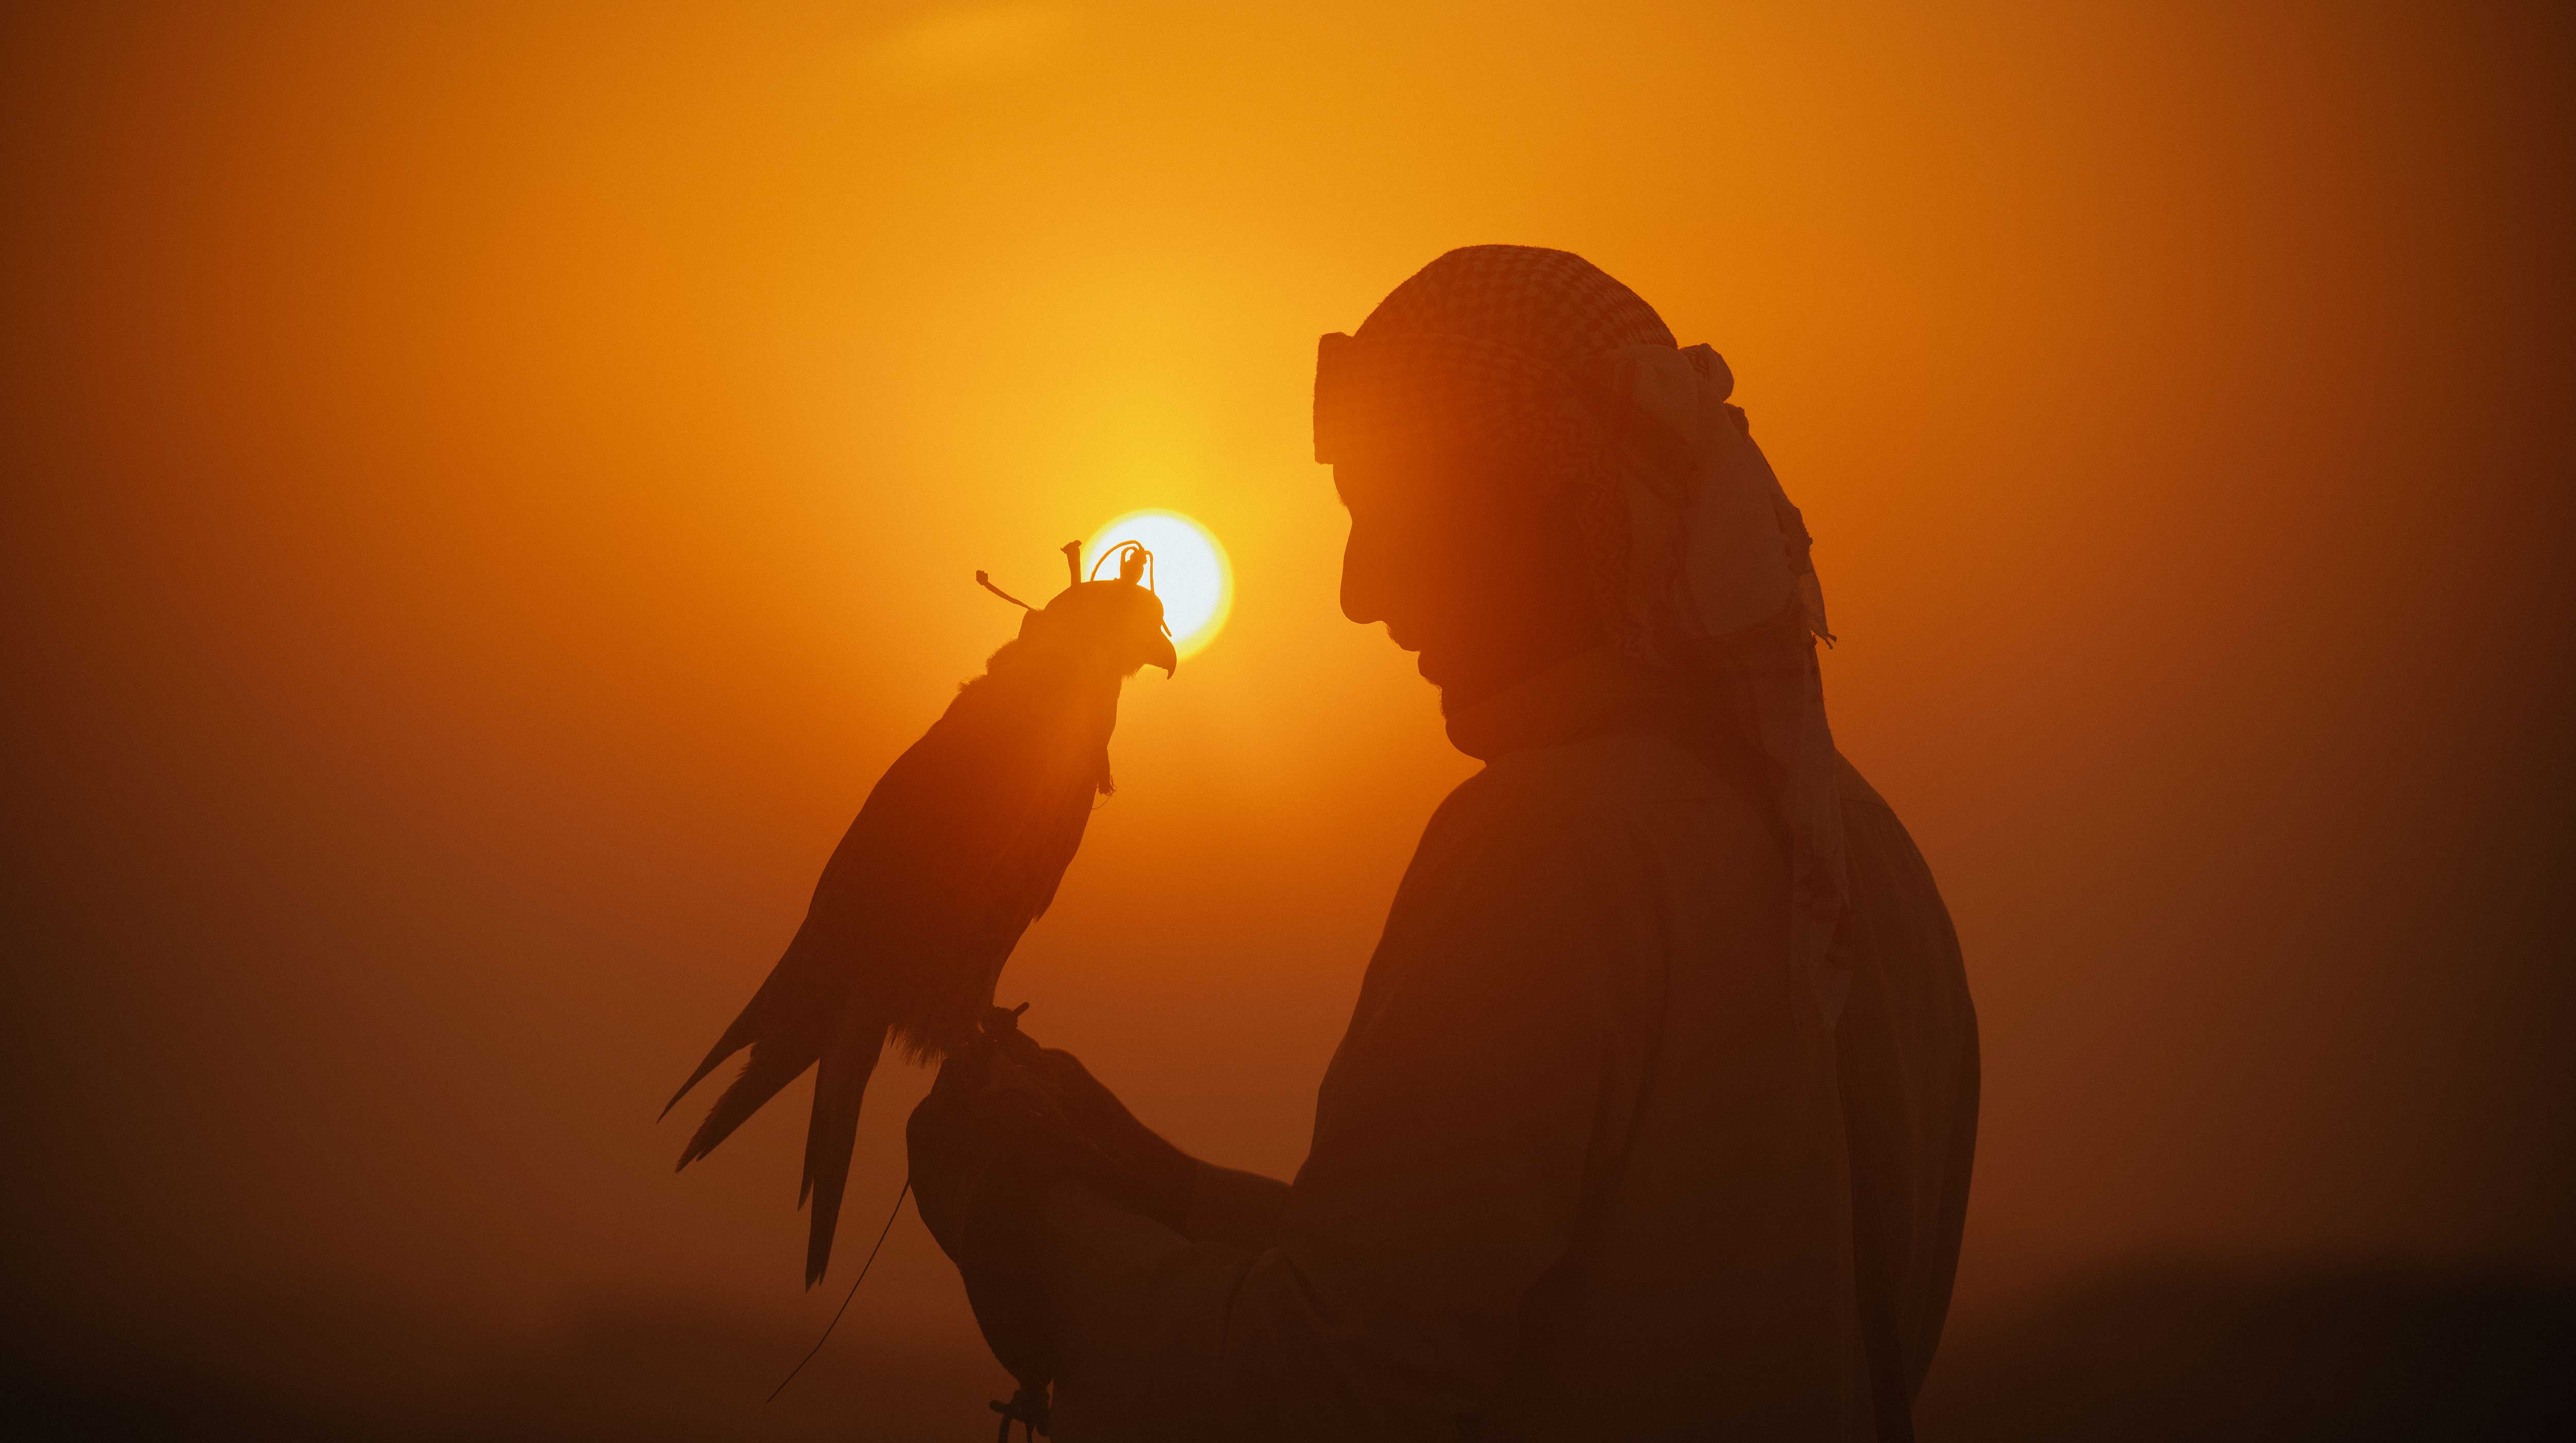 Emirati man holding falcon in the desert at sunset